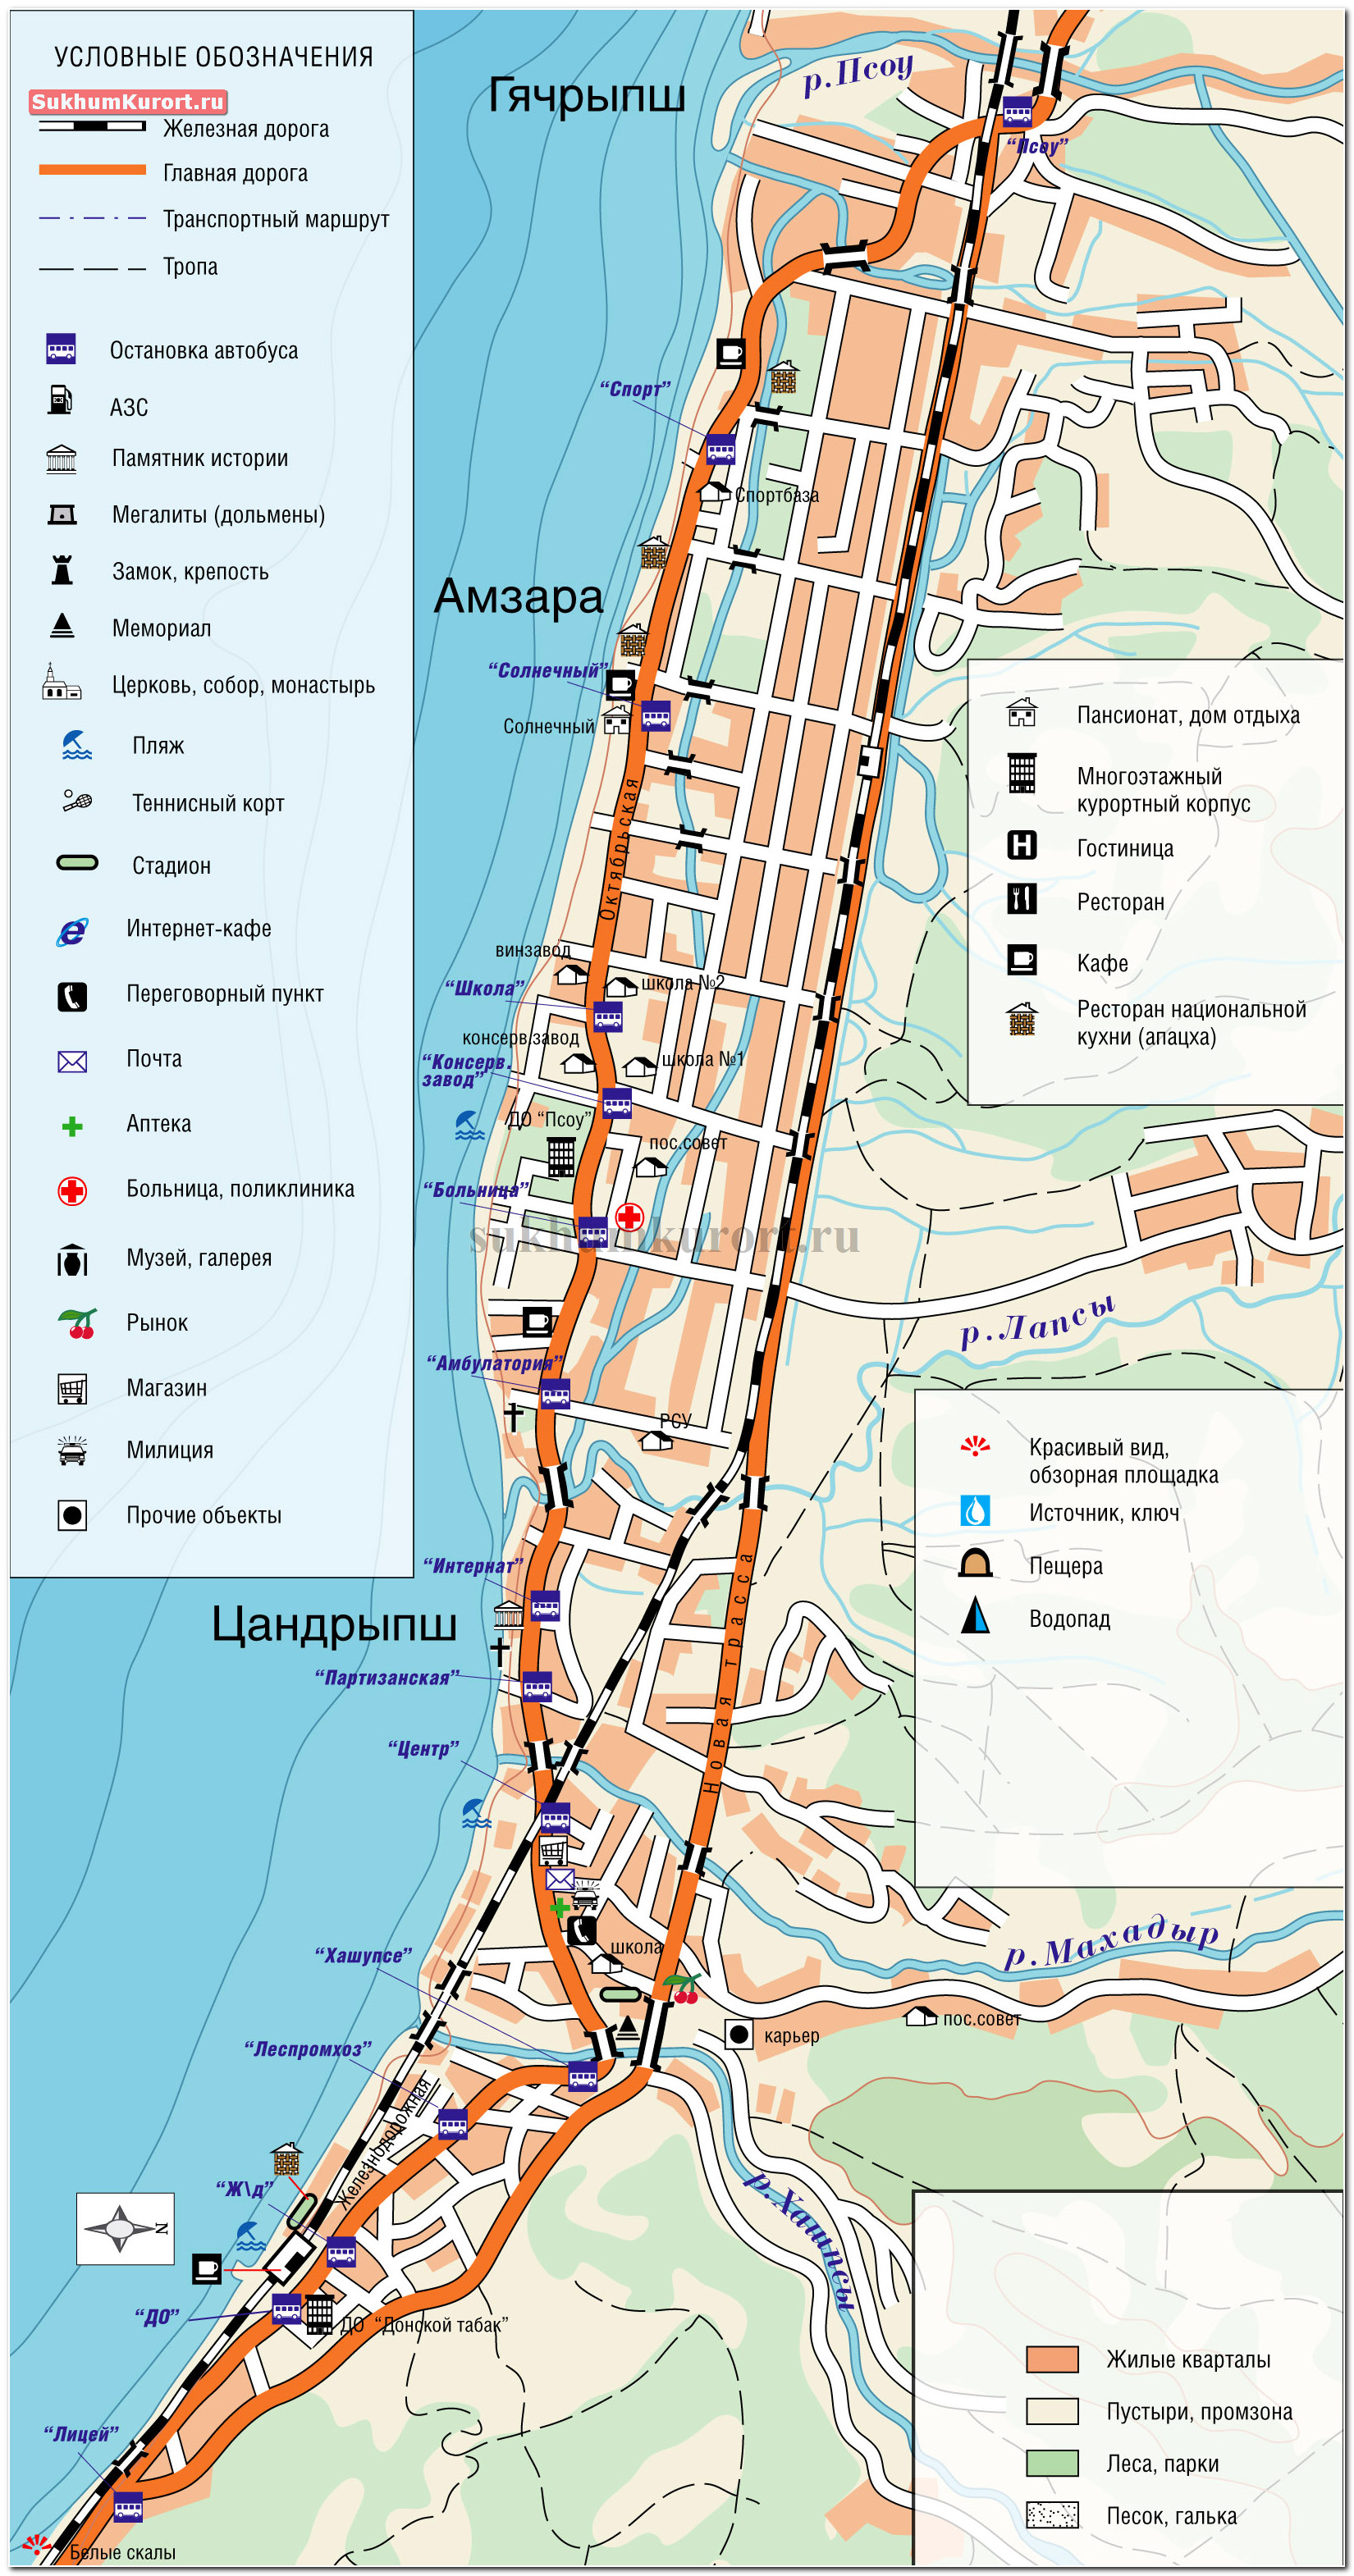 Карта Шилки С Улицами И Номерами Домов Онлайн